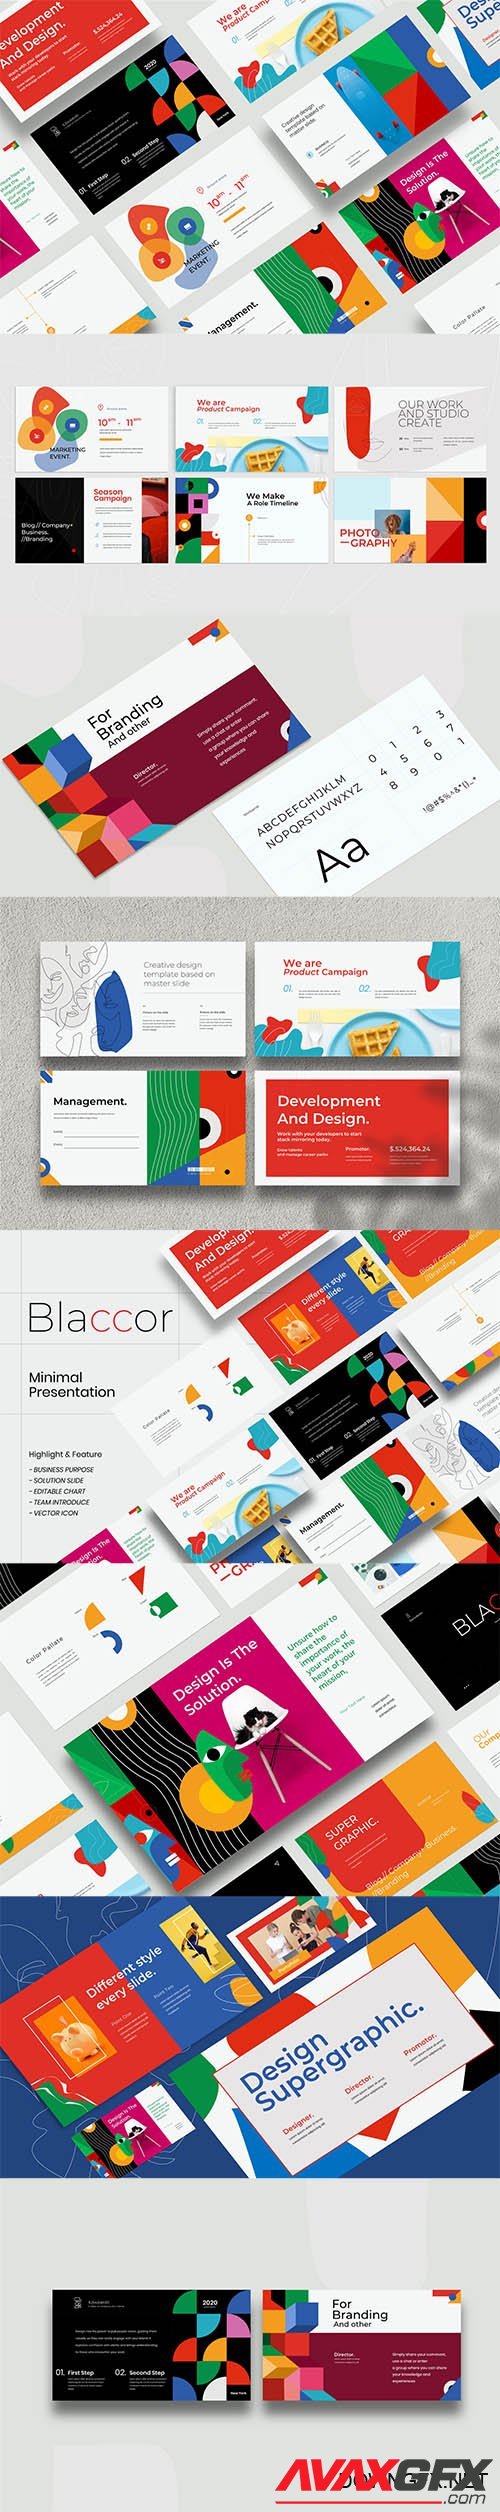 Blaccor PowerPoint, Keynote and Google Slides Presentation